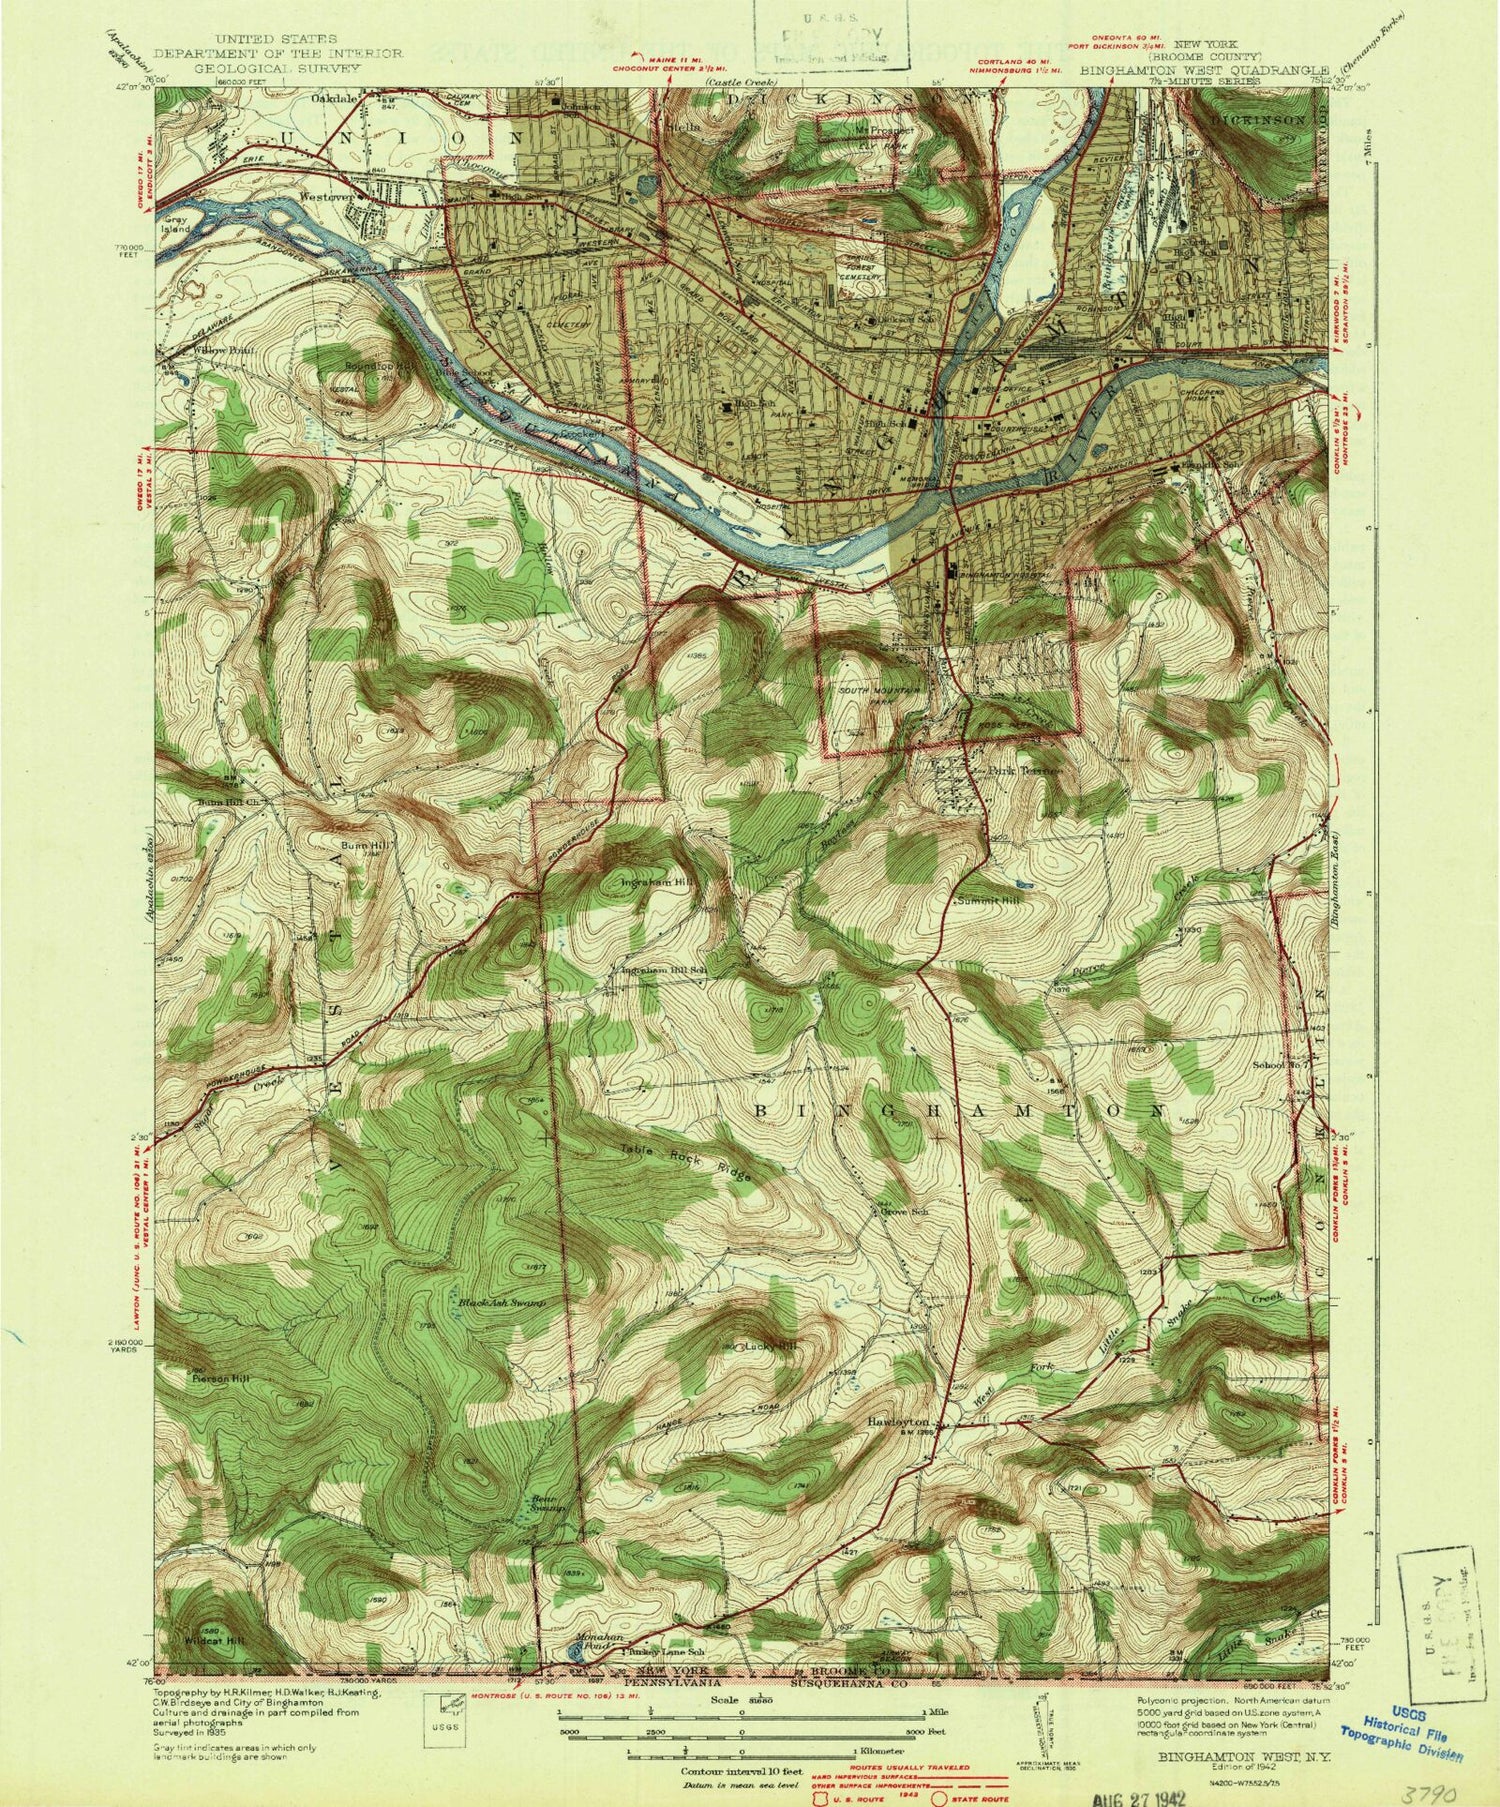 Classic USGS Binghamton West New York 7.5'x7.5' Topo Map Image